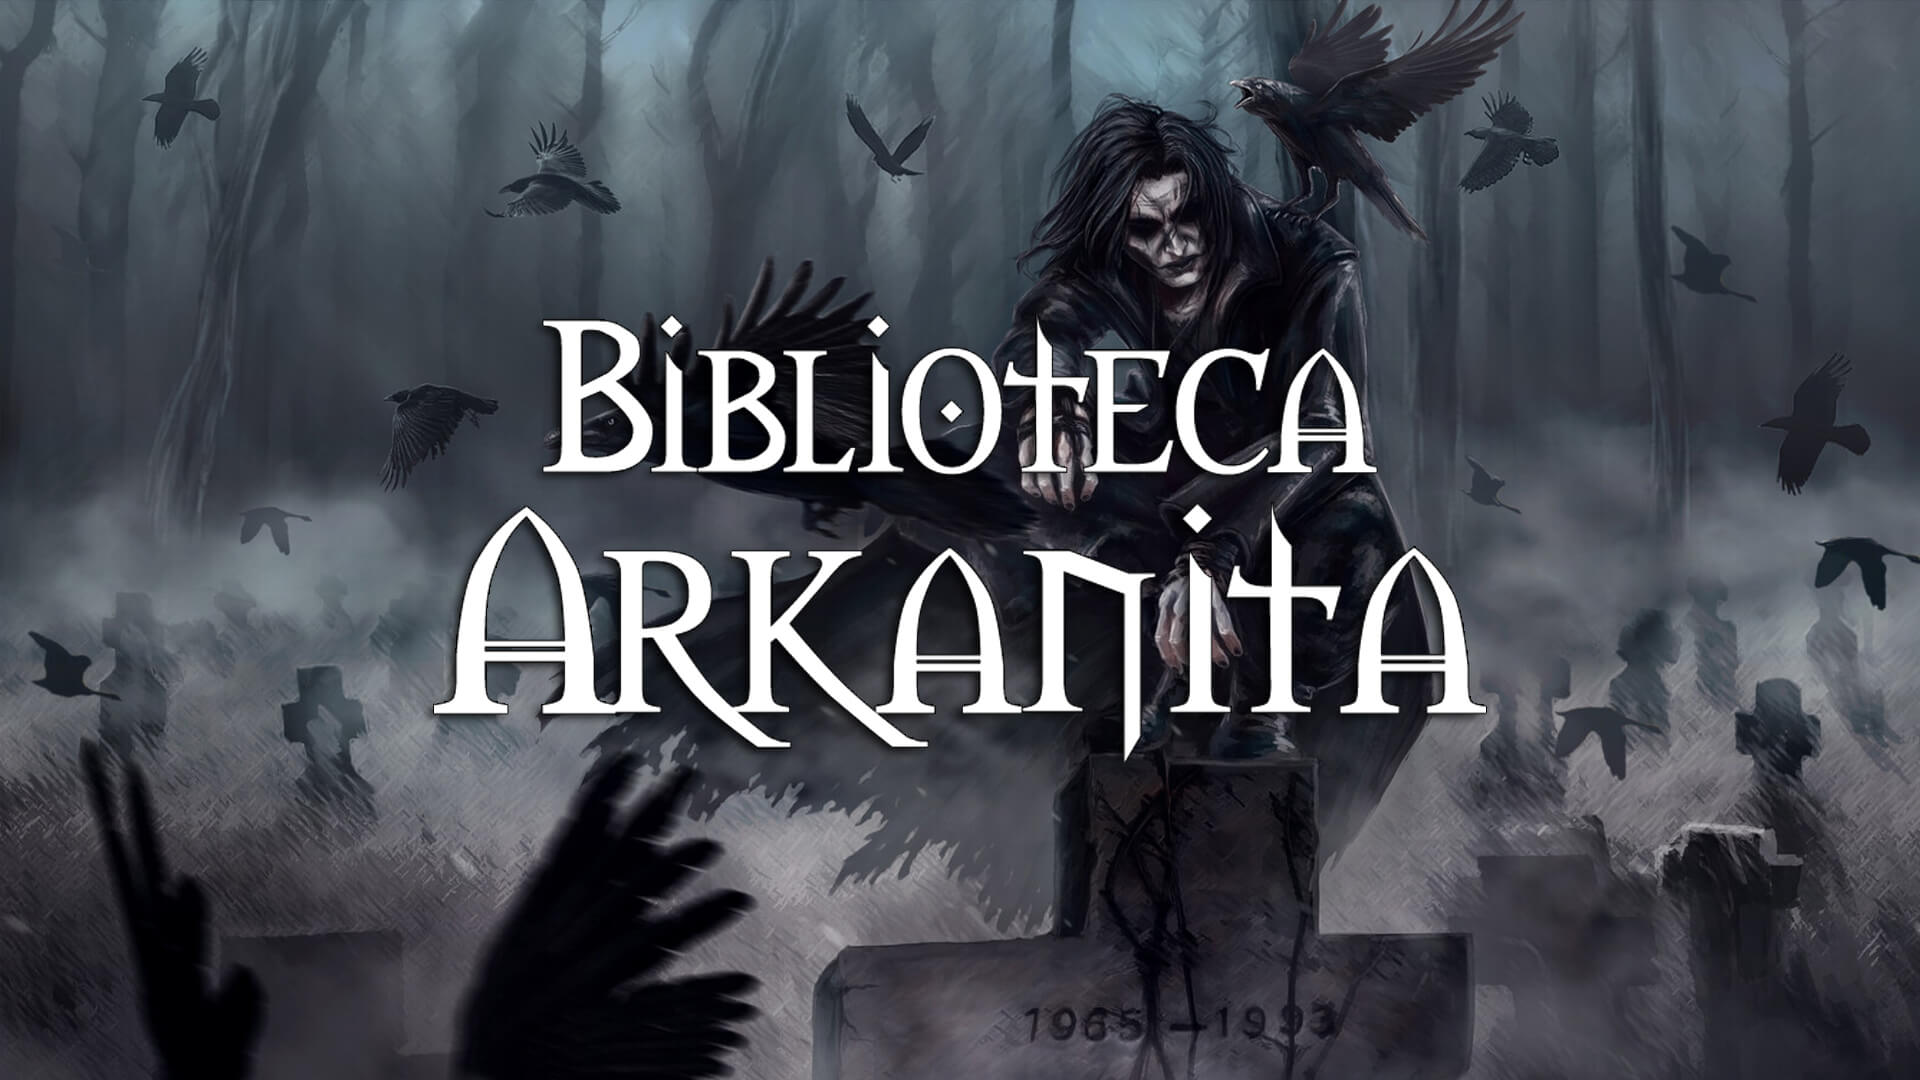 Caruanas - Biblioteca Arkanita - Movimento RPG